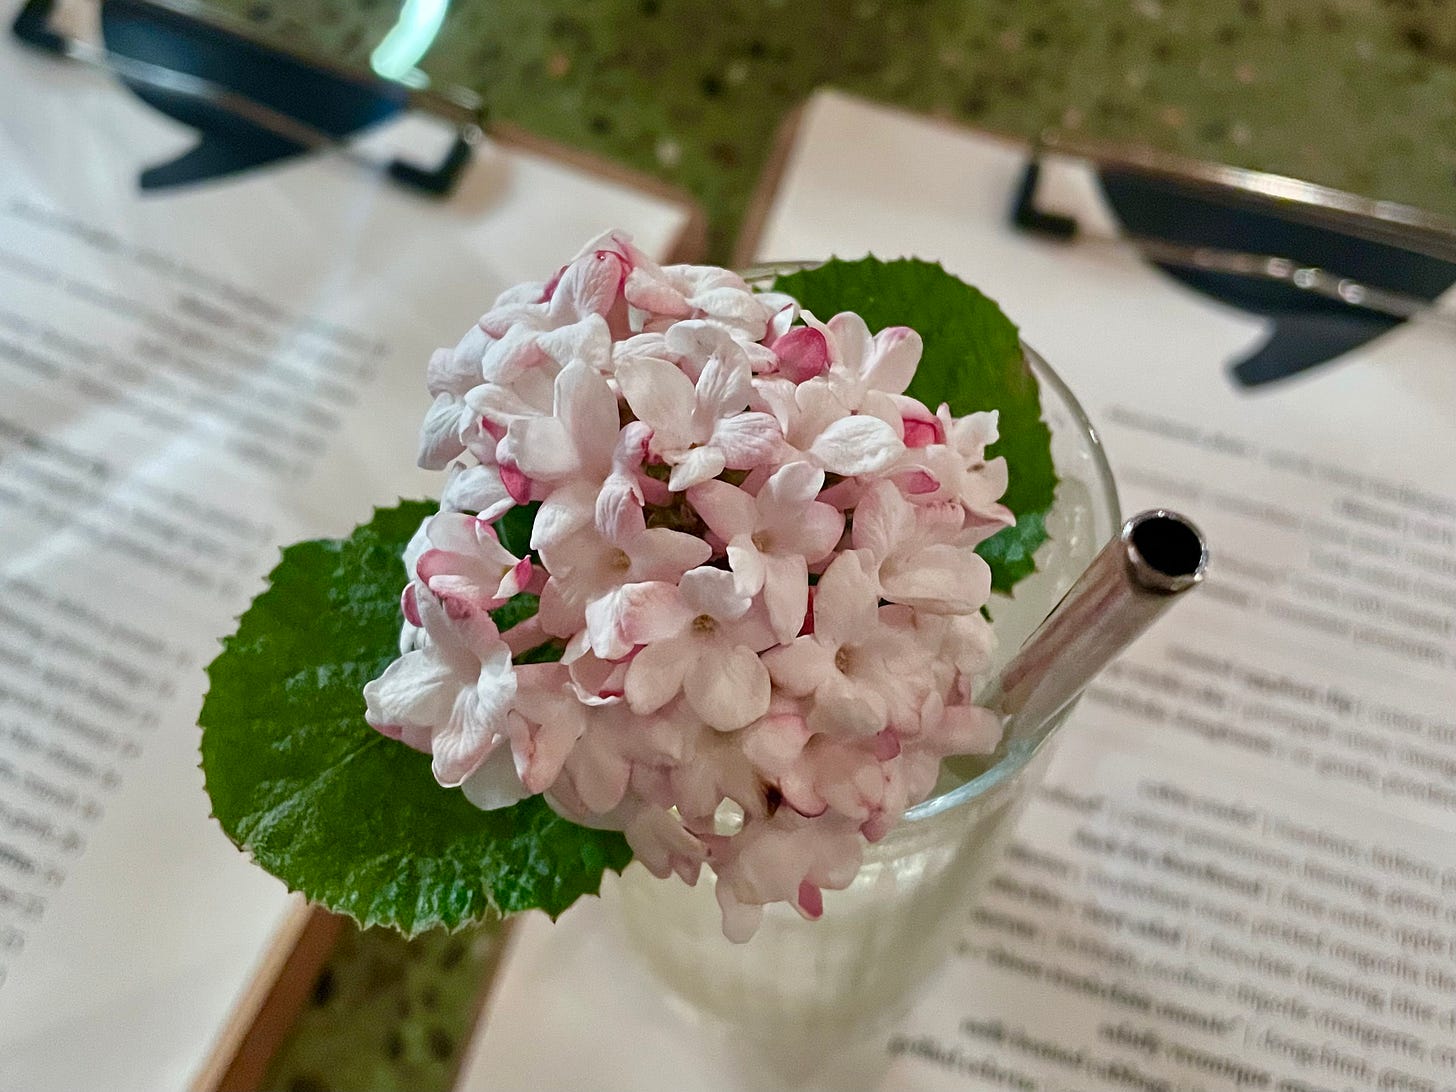 ID: Cocktail at Spoke Wine Bar garnished with Korean spice bush flower